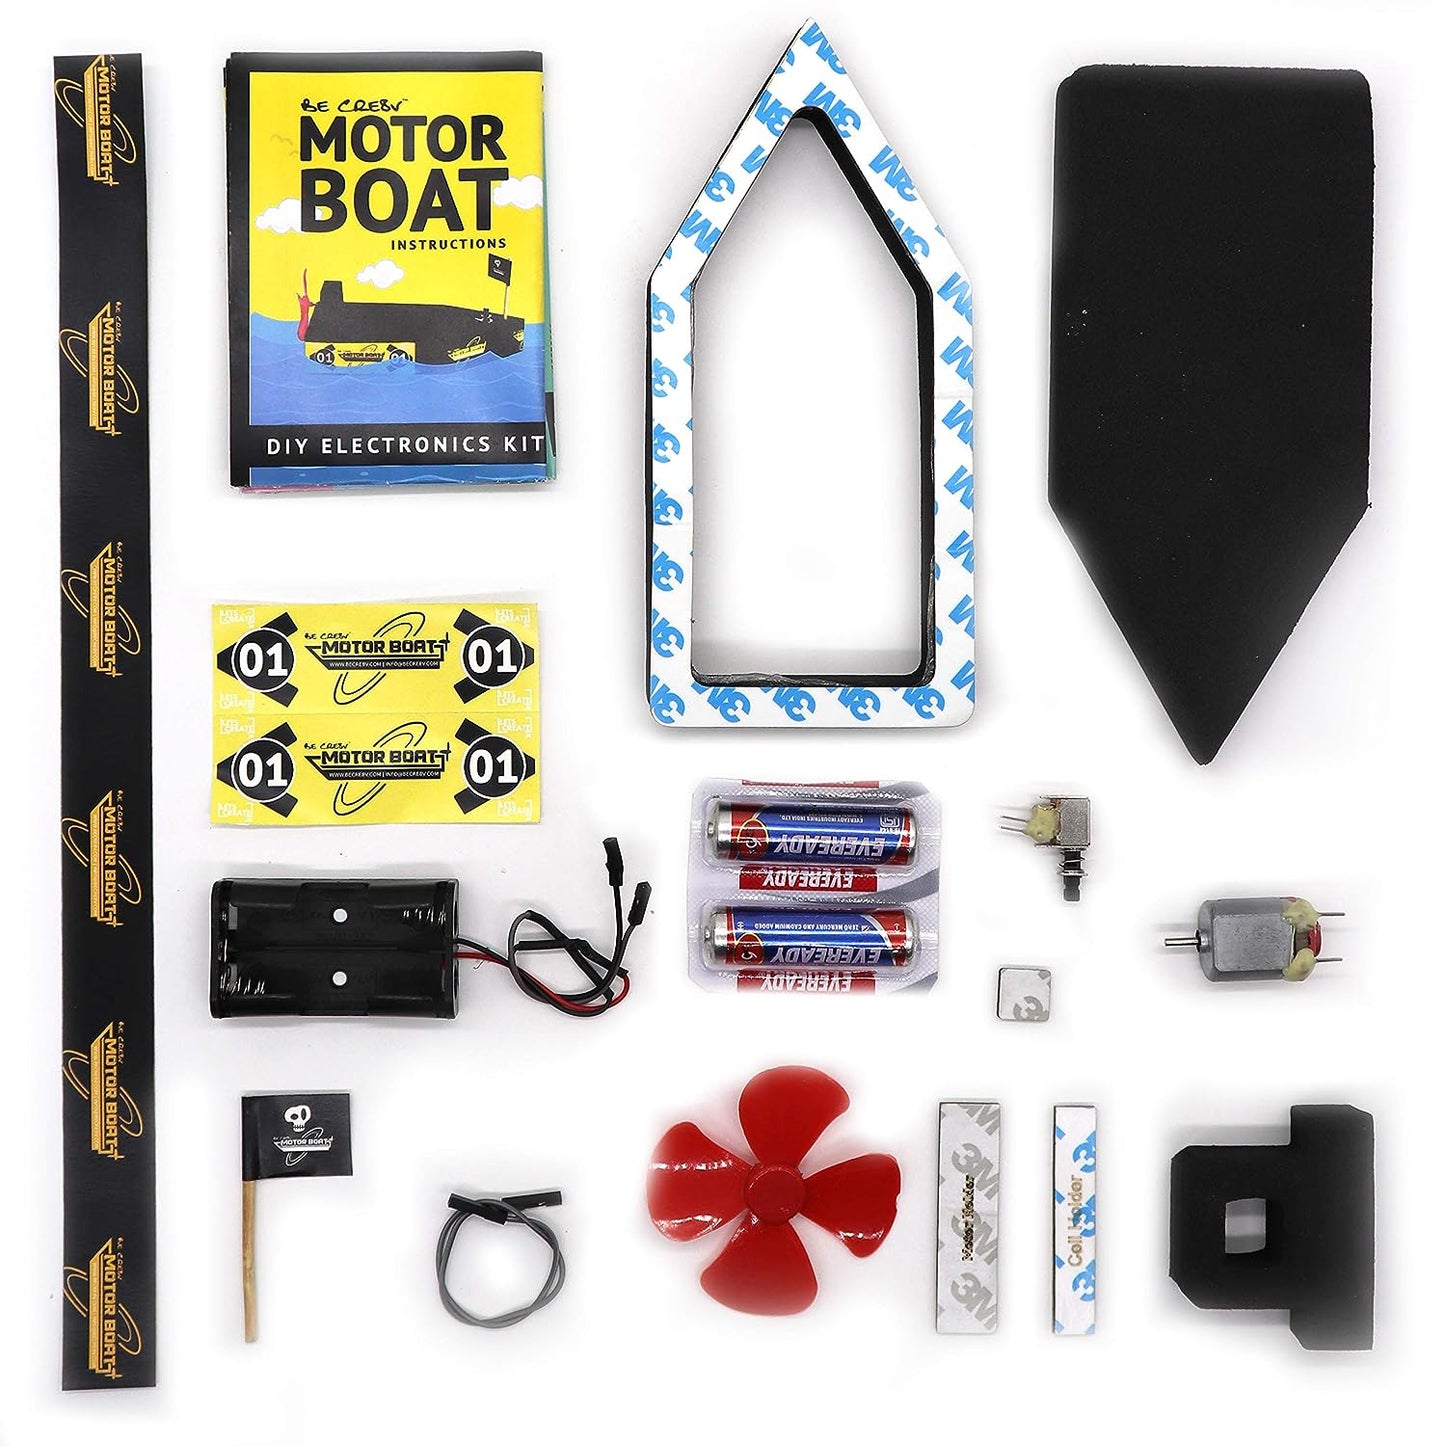 Motor Boat Educational DIY Kit for Kids (STEM Based)